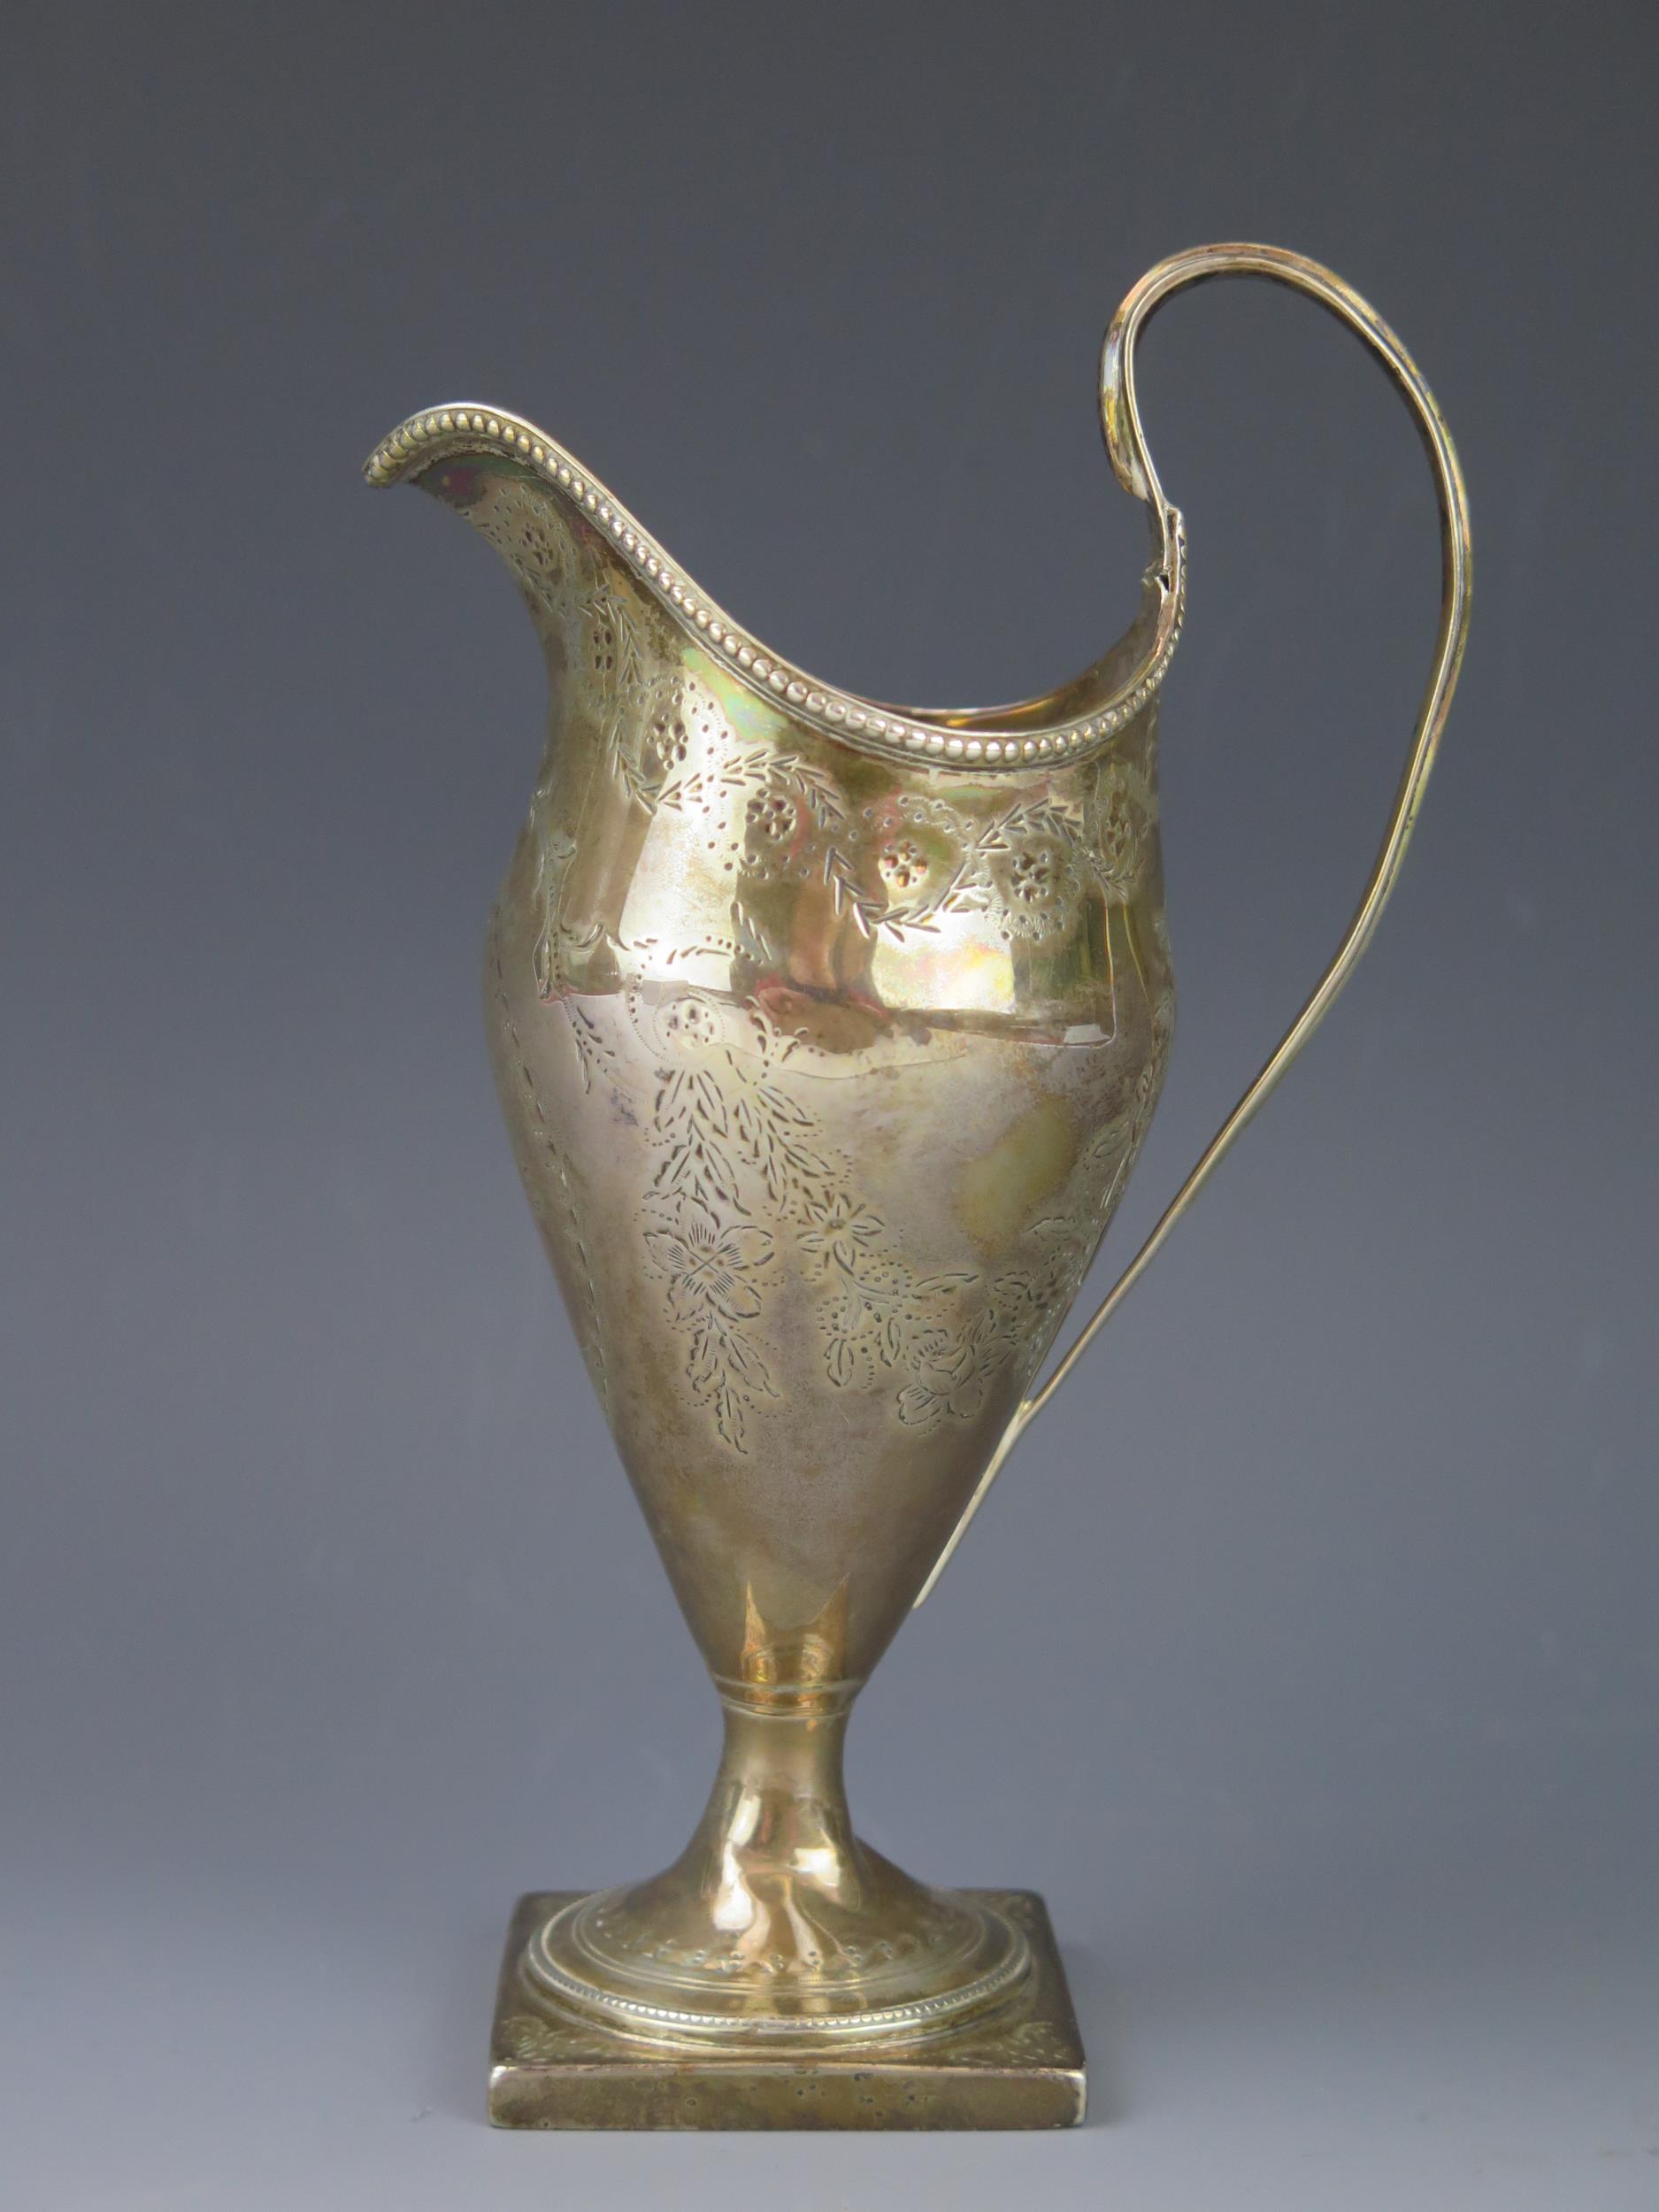 A George III silver cream jug, maker's mark worn, London, 1786, monogrammed, of helmet-shaped